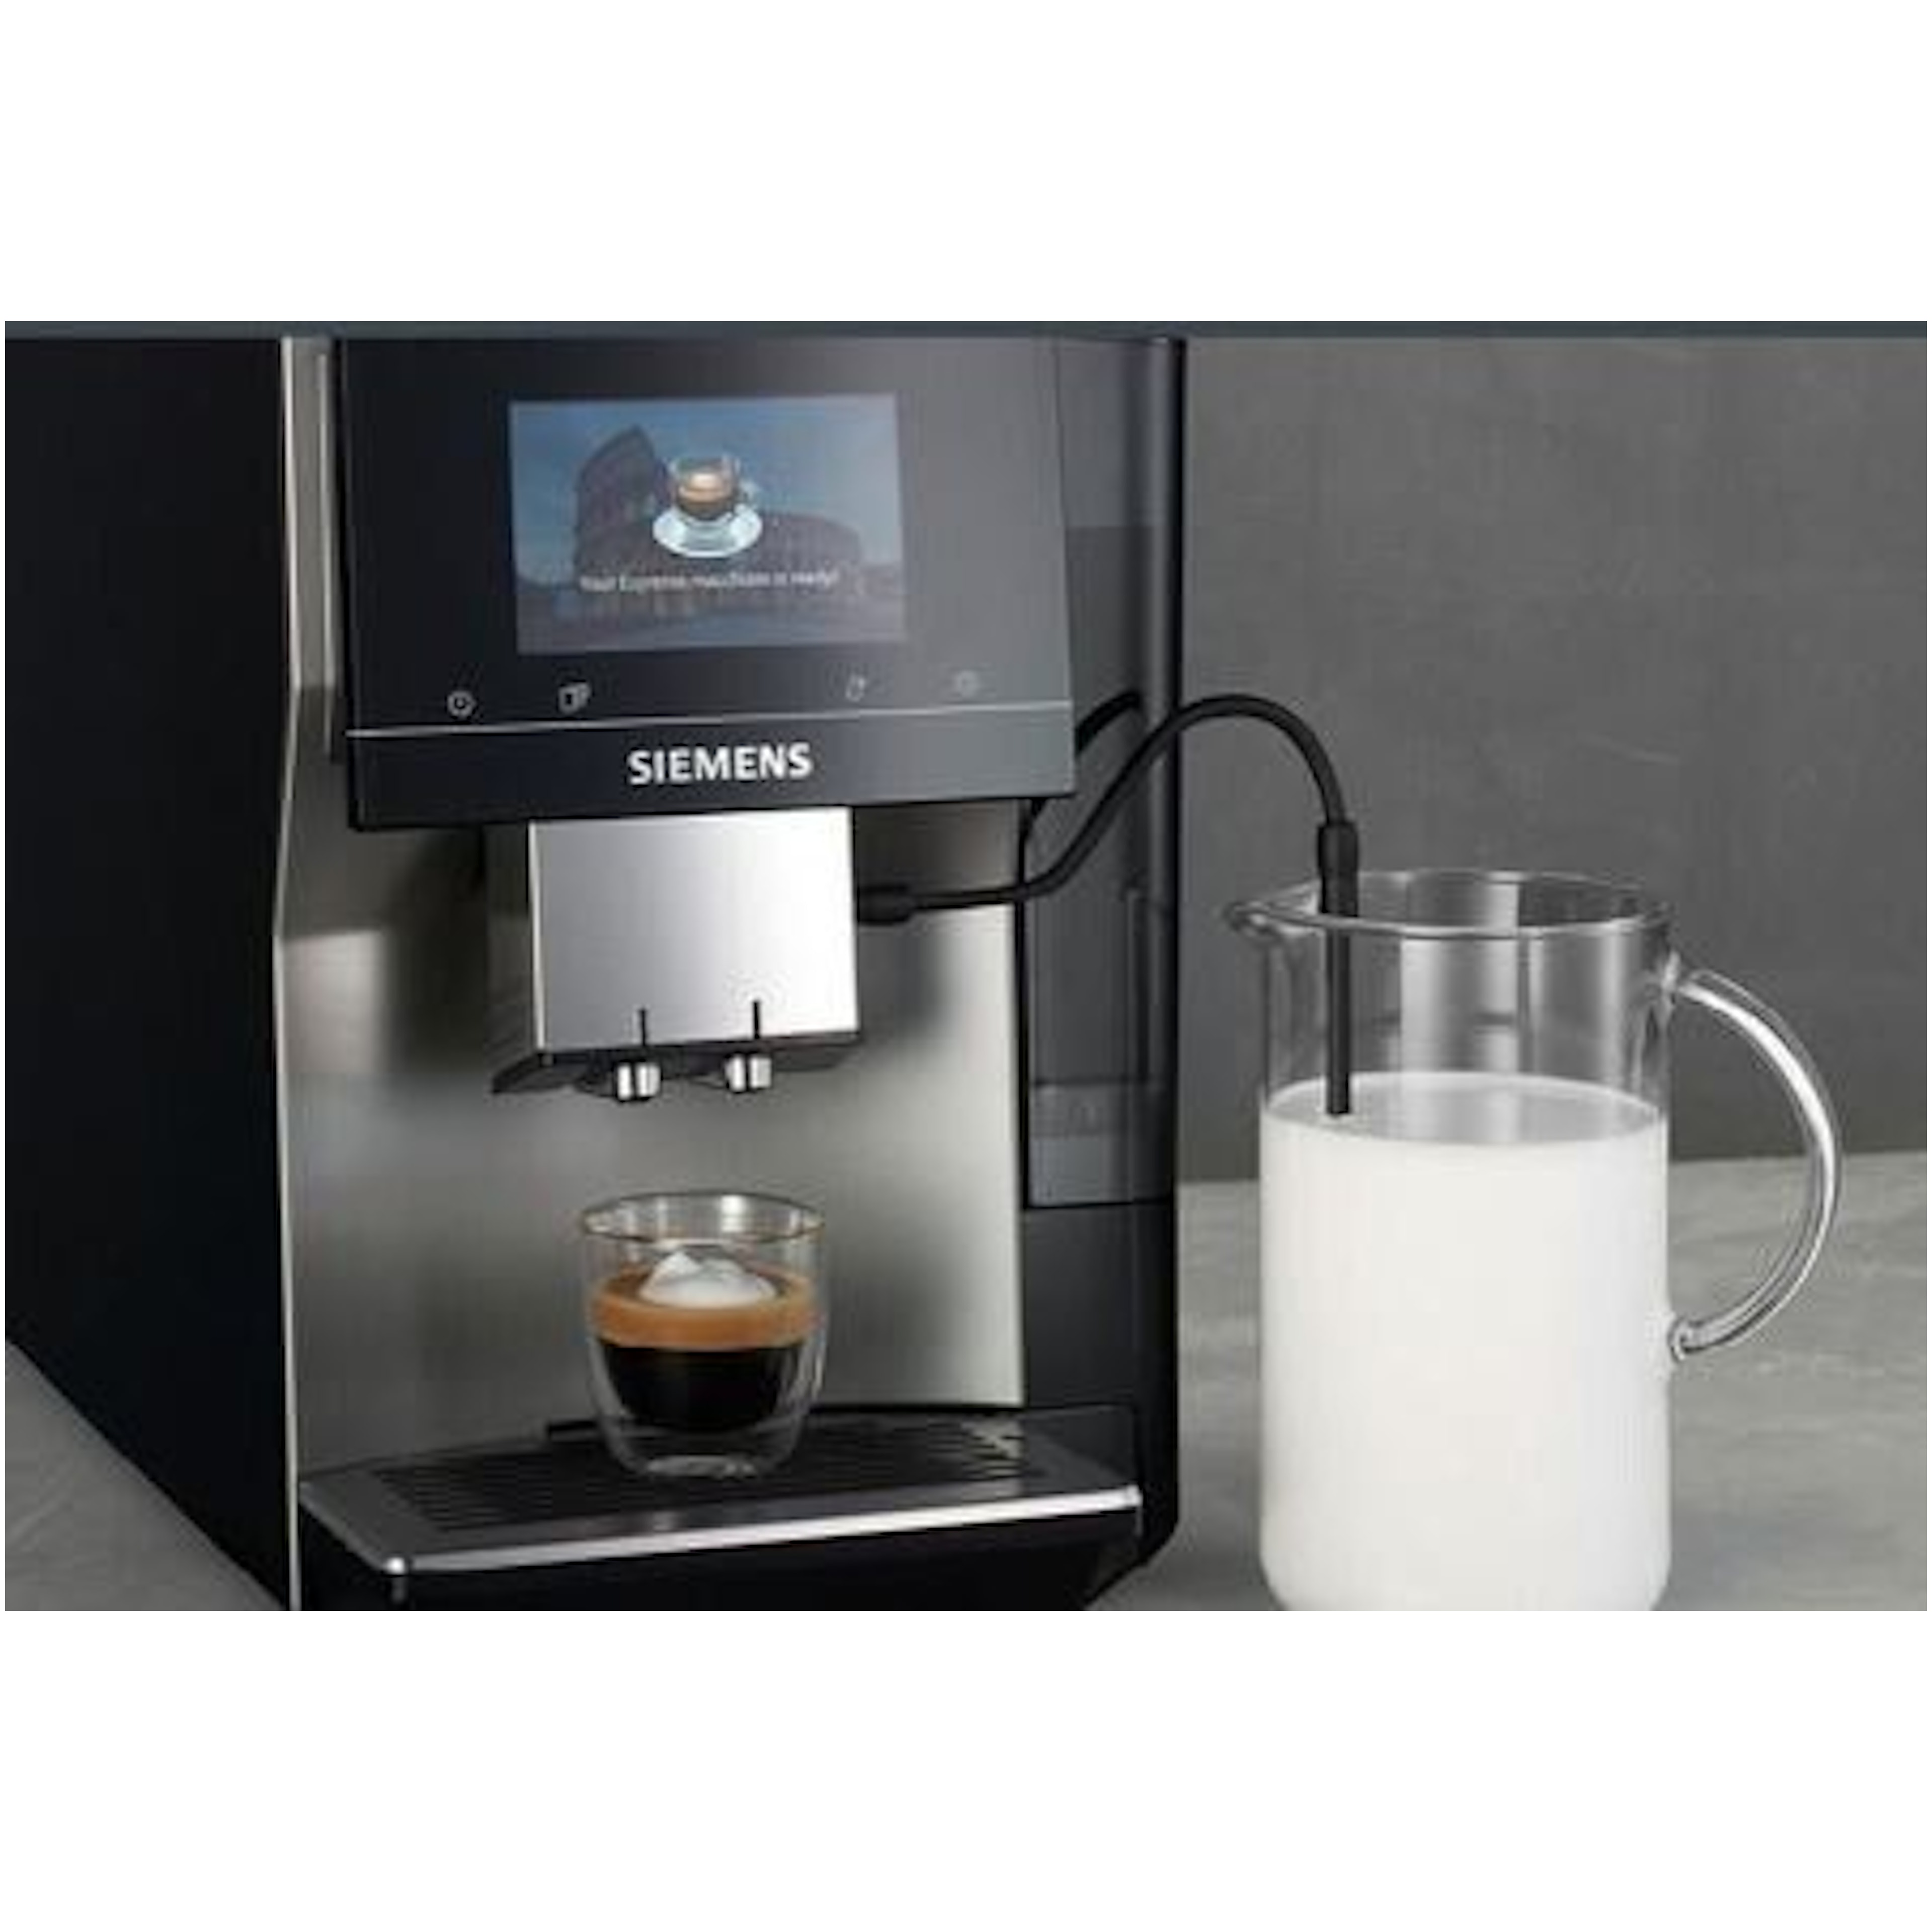 Siemens TP705R01 vrijstaand koffiemachine afbeelding 5